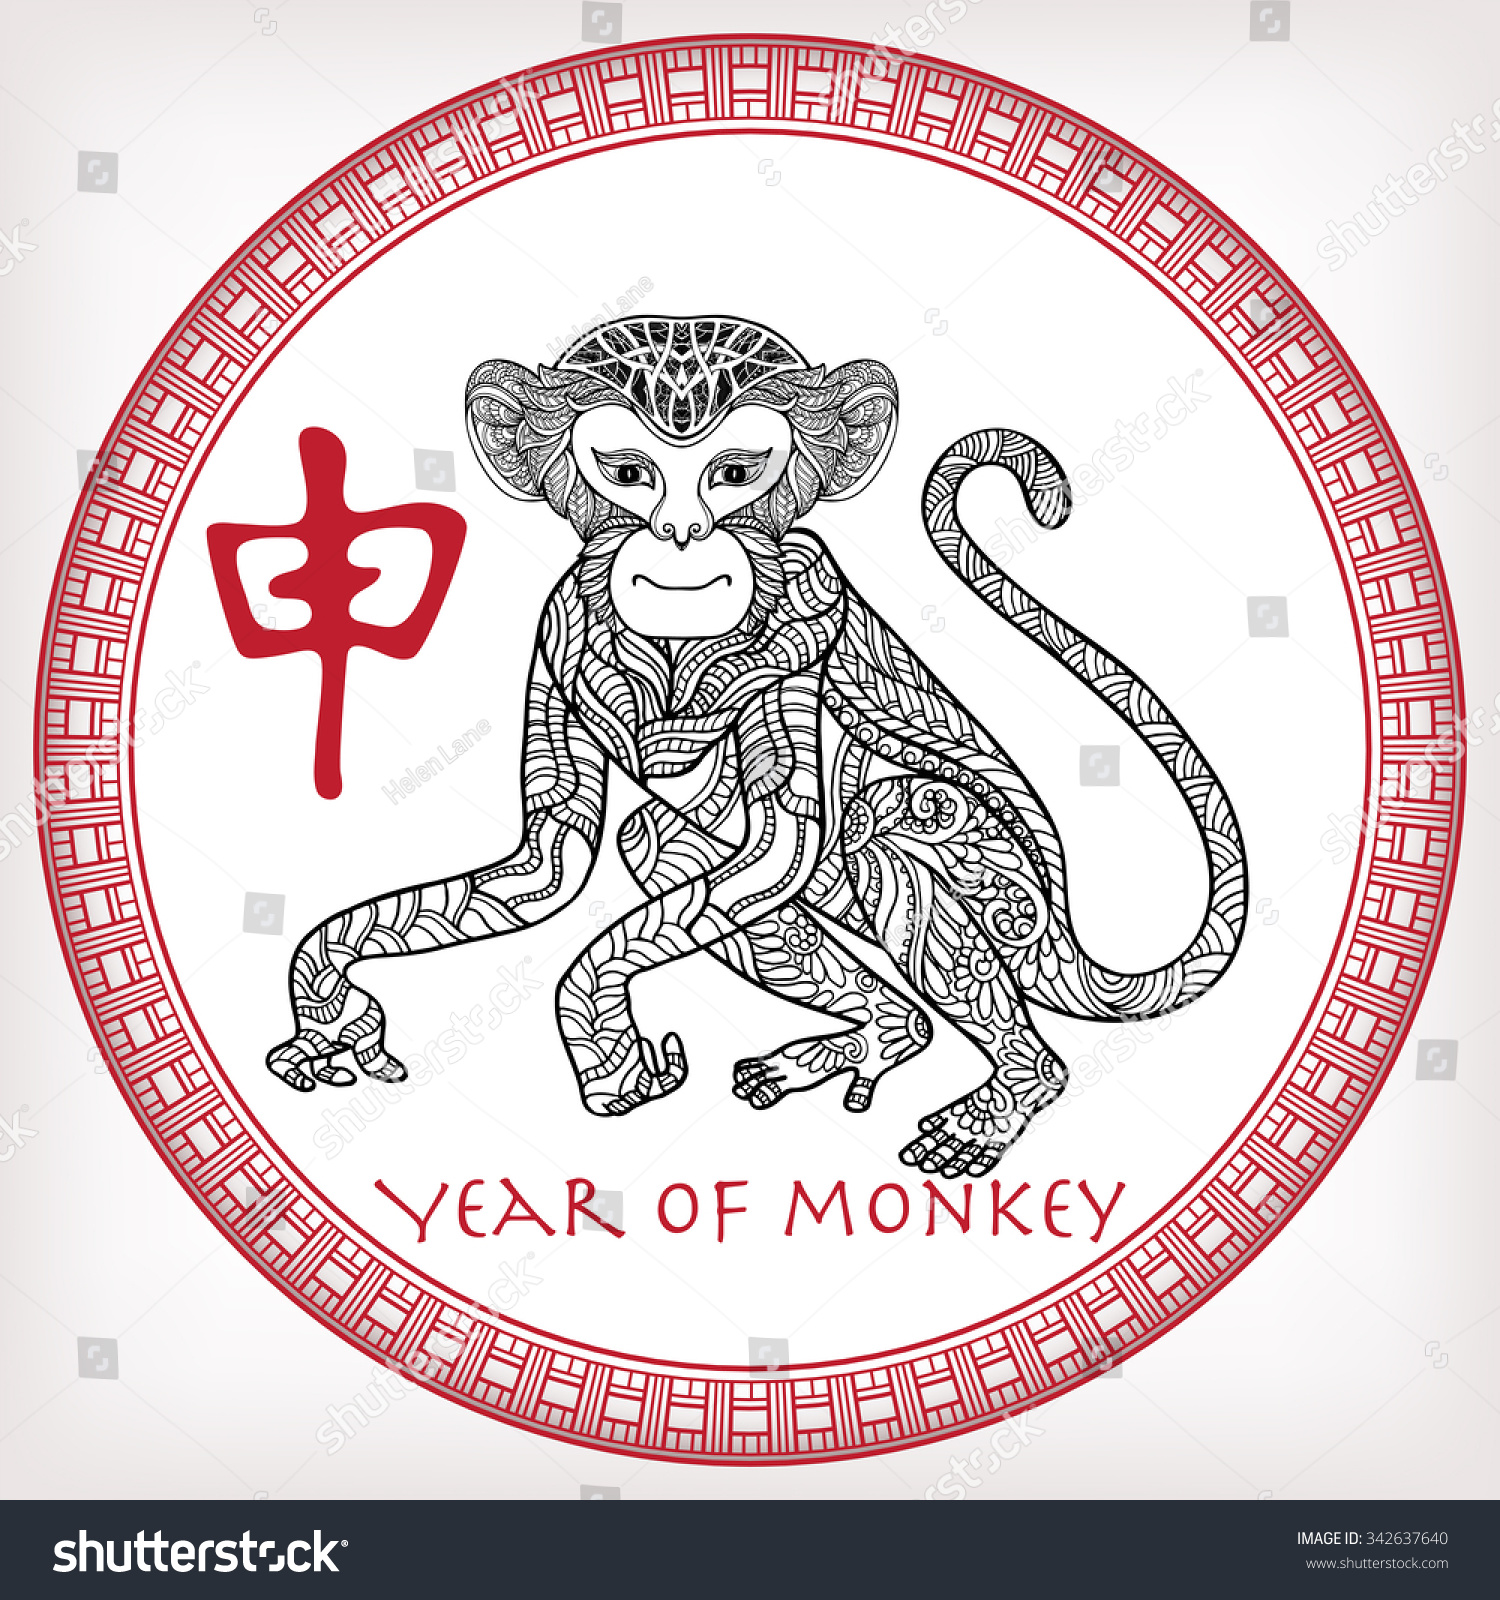 Китайский гороскоп обезьяна. Год обезьяны 1980. Китайский знак зодиака обезьяна. Китайский гороскоп обезьяна талисман.